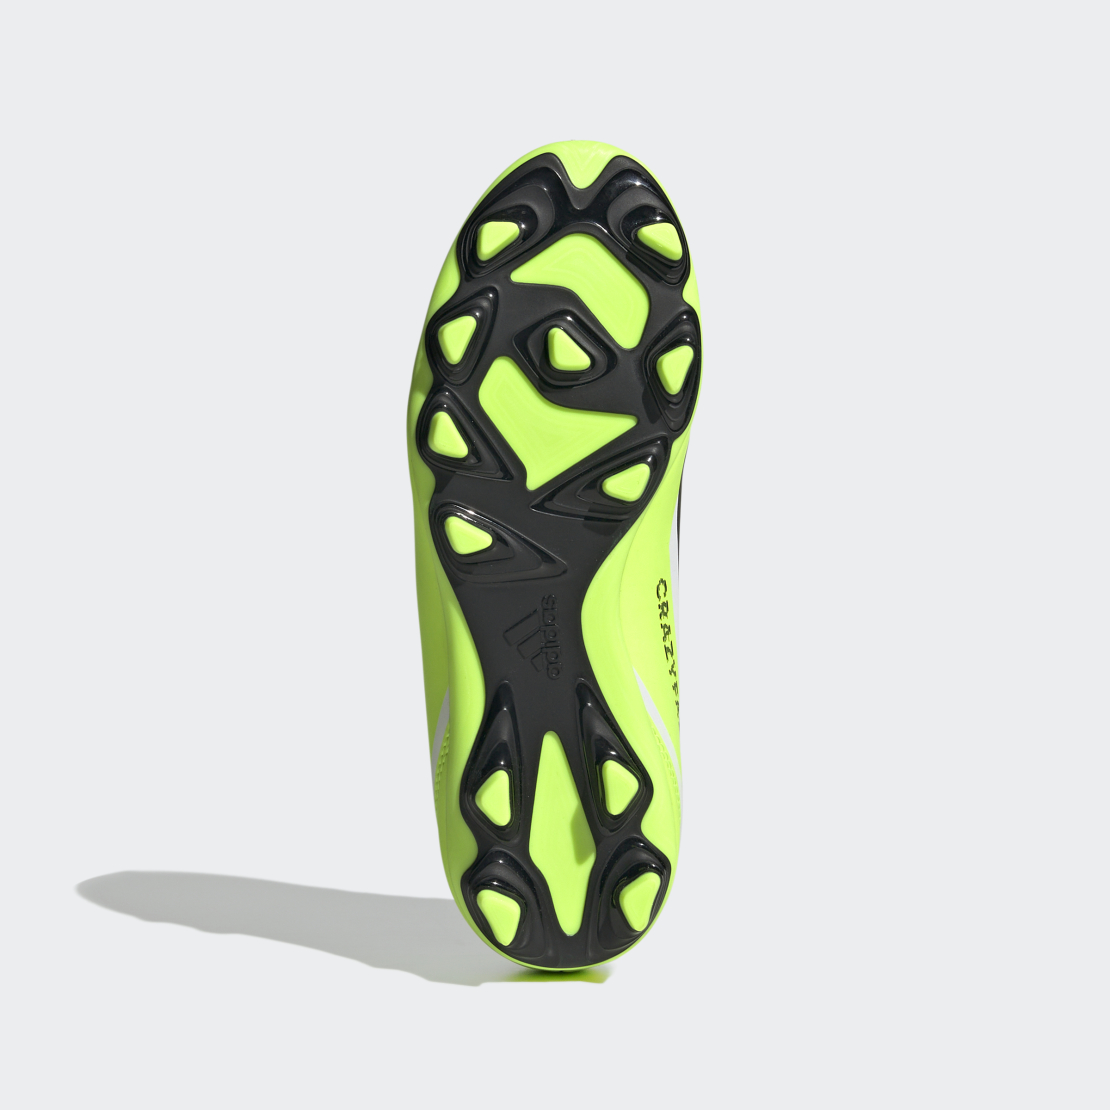 נעלי כדורגל לנוער | Adidas Crazyfast 4 Fxg J